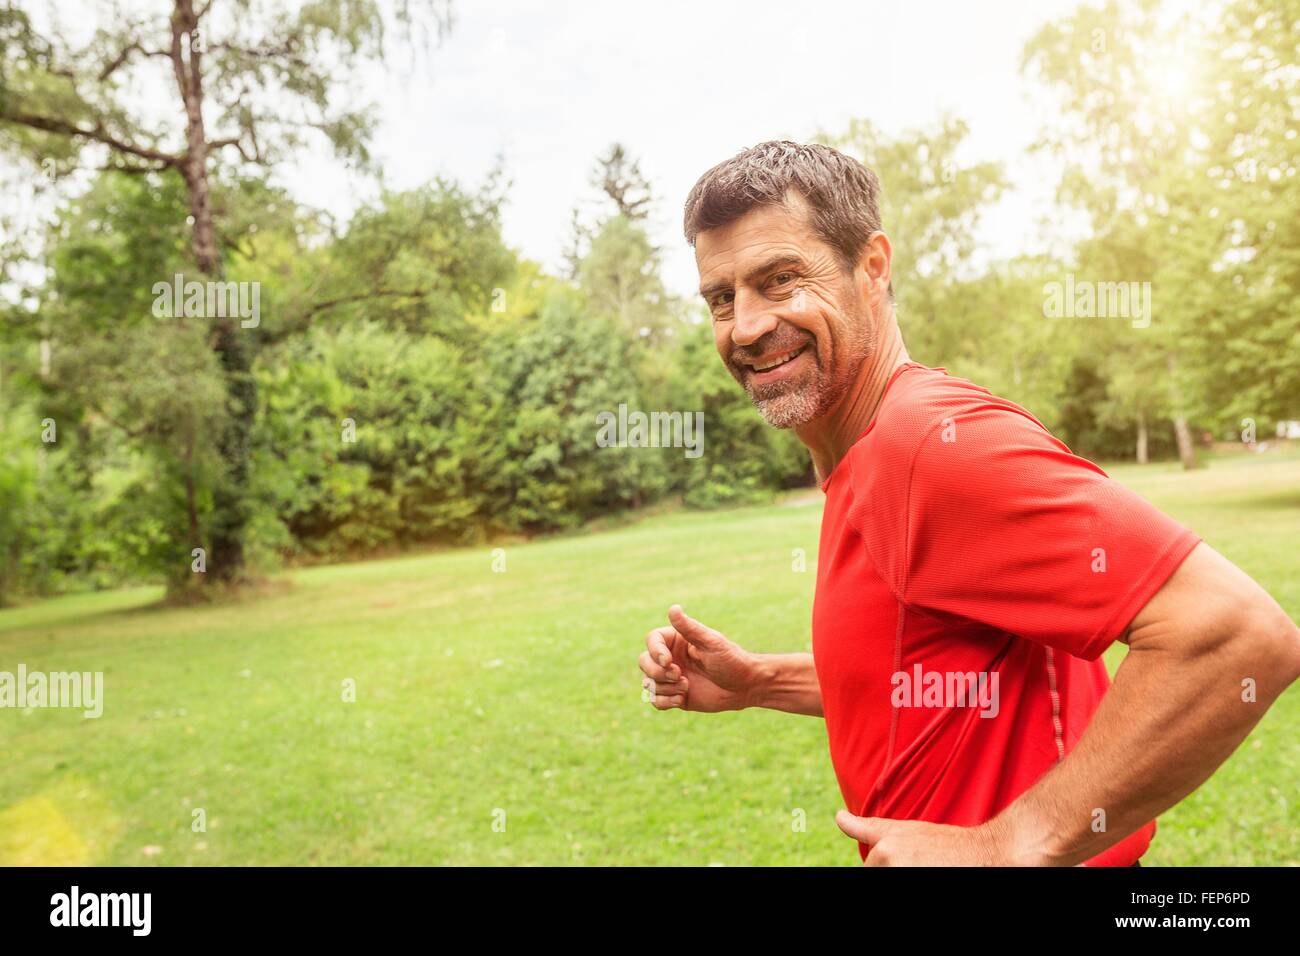 Mature man running outdoors, smiling Stock Photo